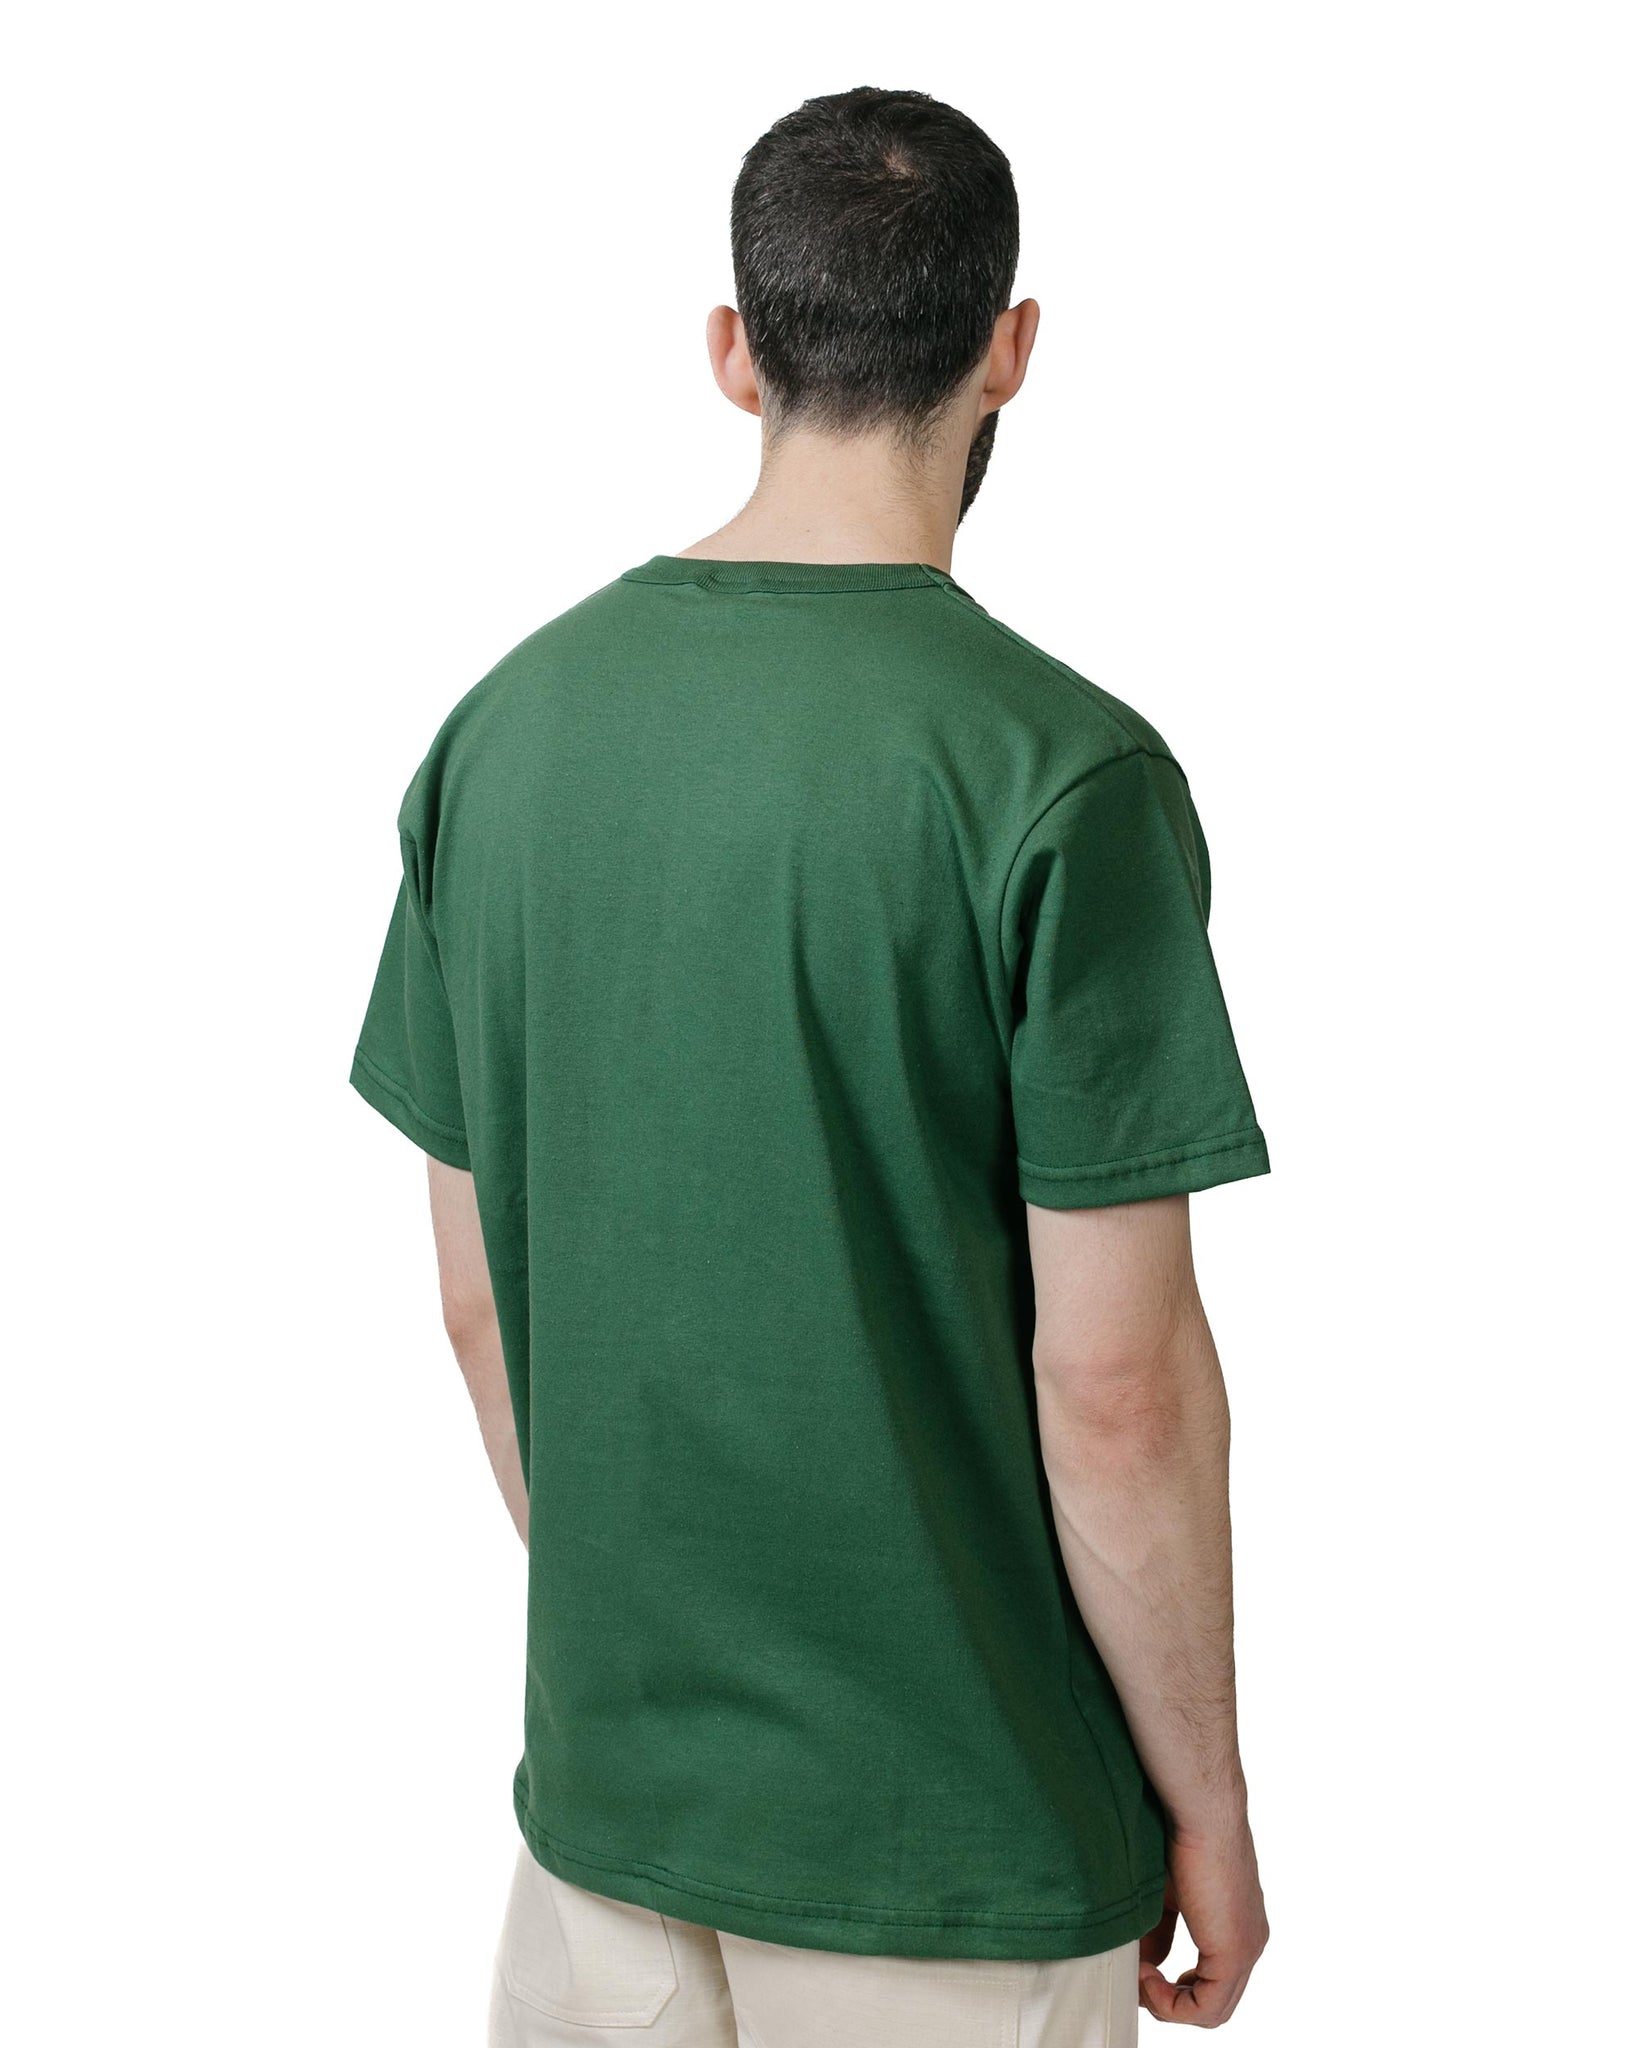 Randy's Garments Pocket Tee Dark Green model back